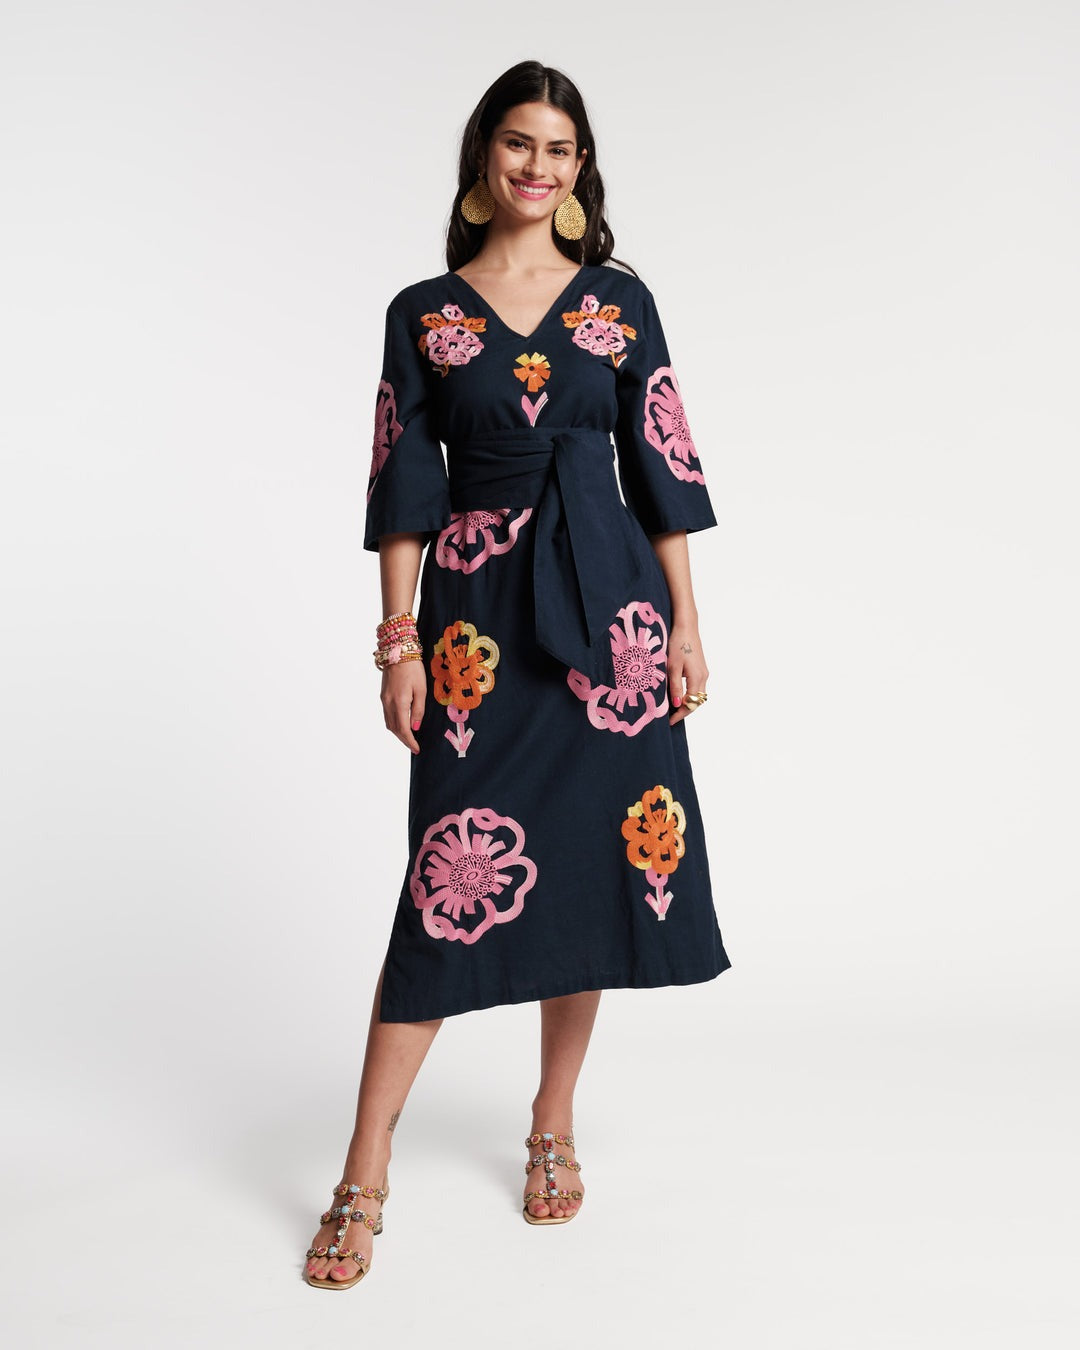 Frances Valentine Emi Dress Graphic Gerbera Cotton Linen Navy/Pink